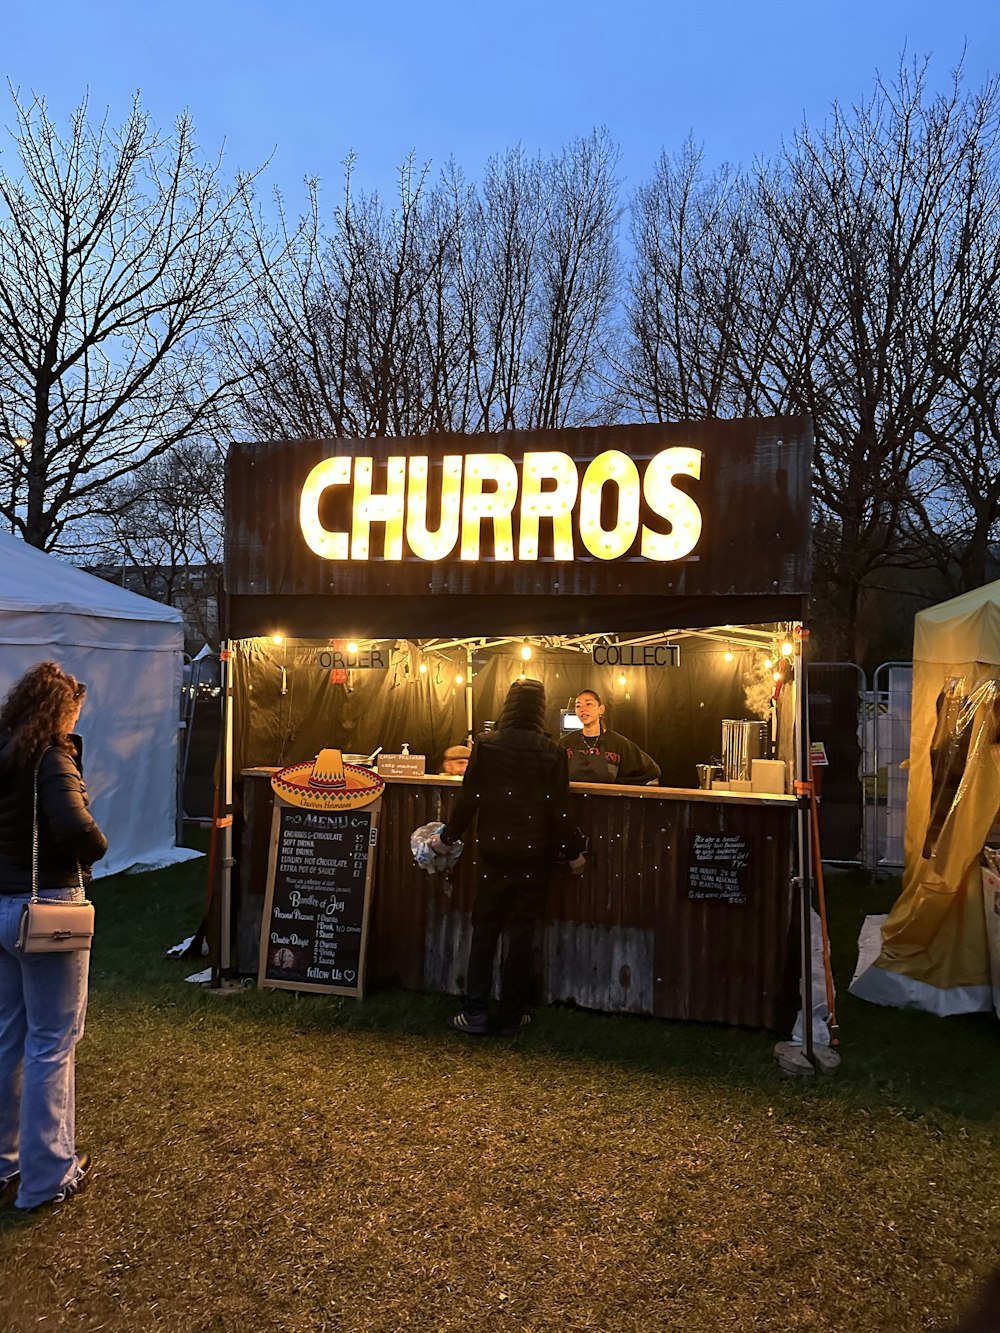 Hero image for supplier Churros Hermanos